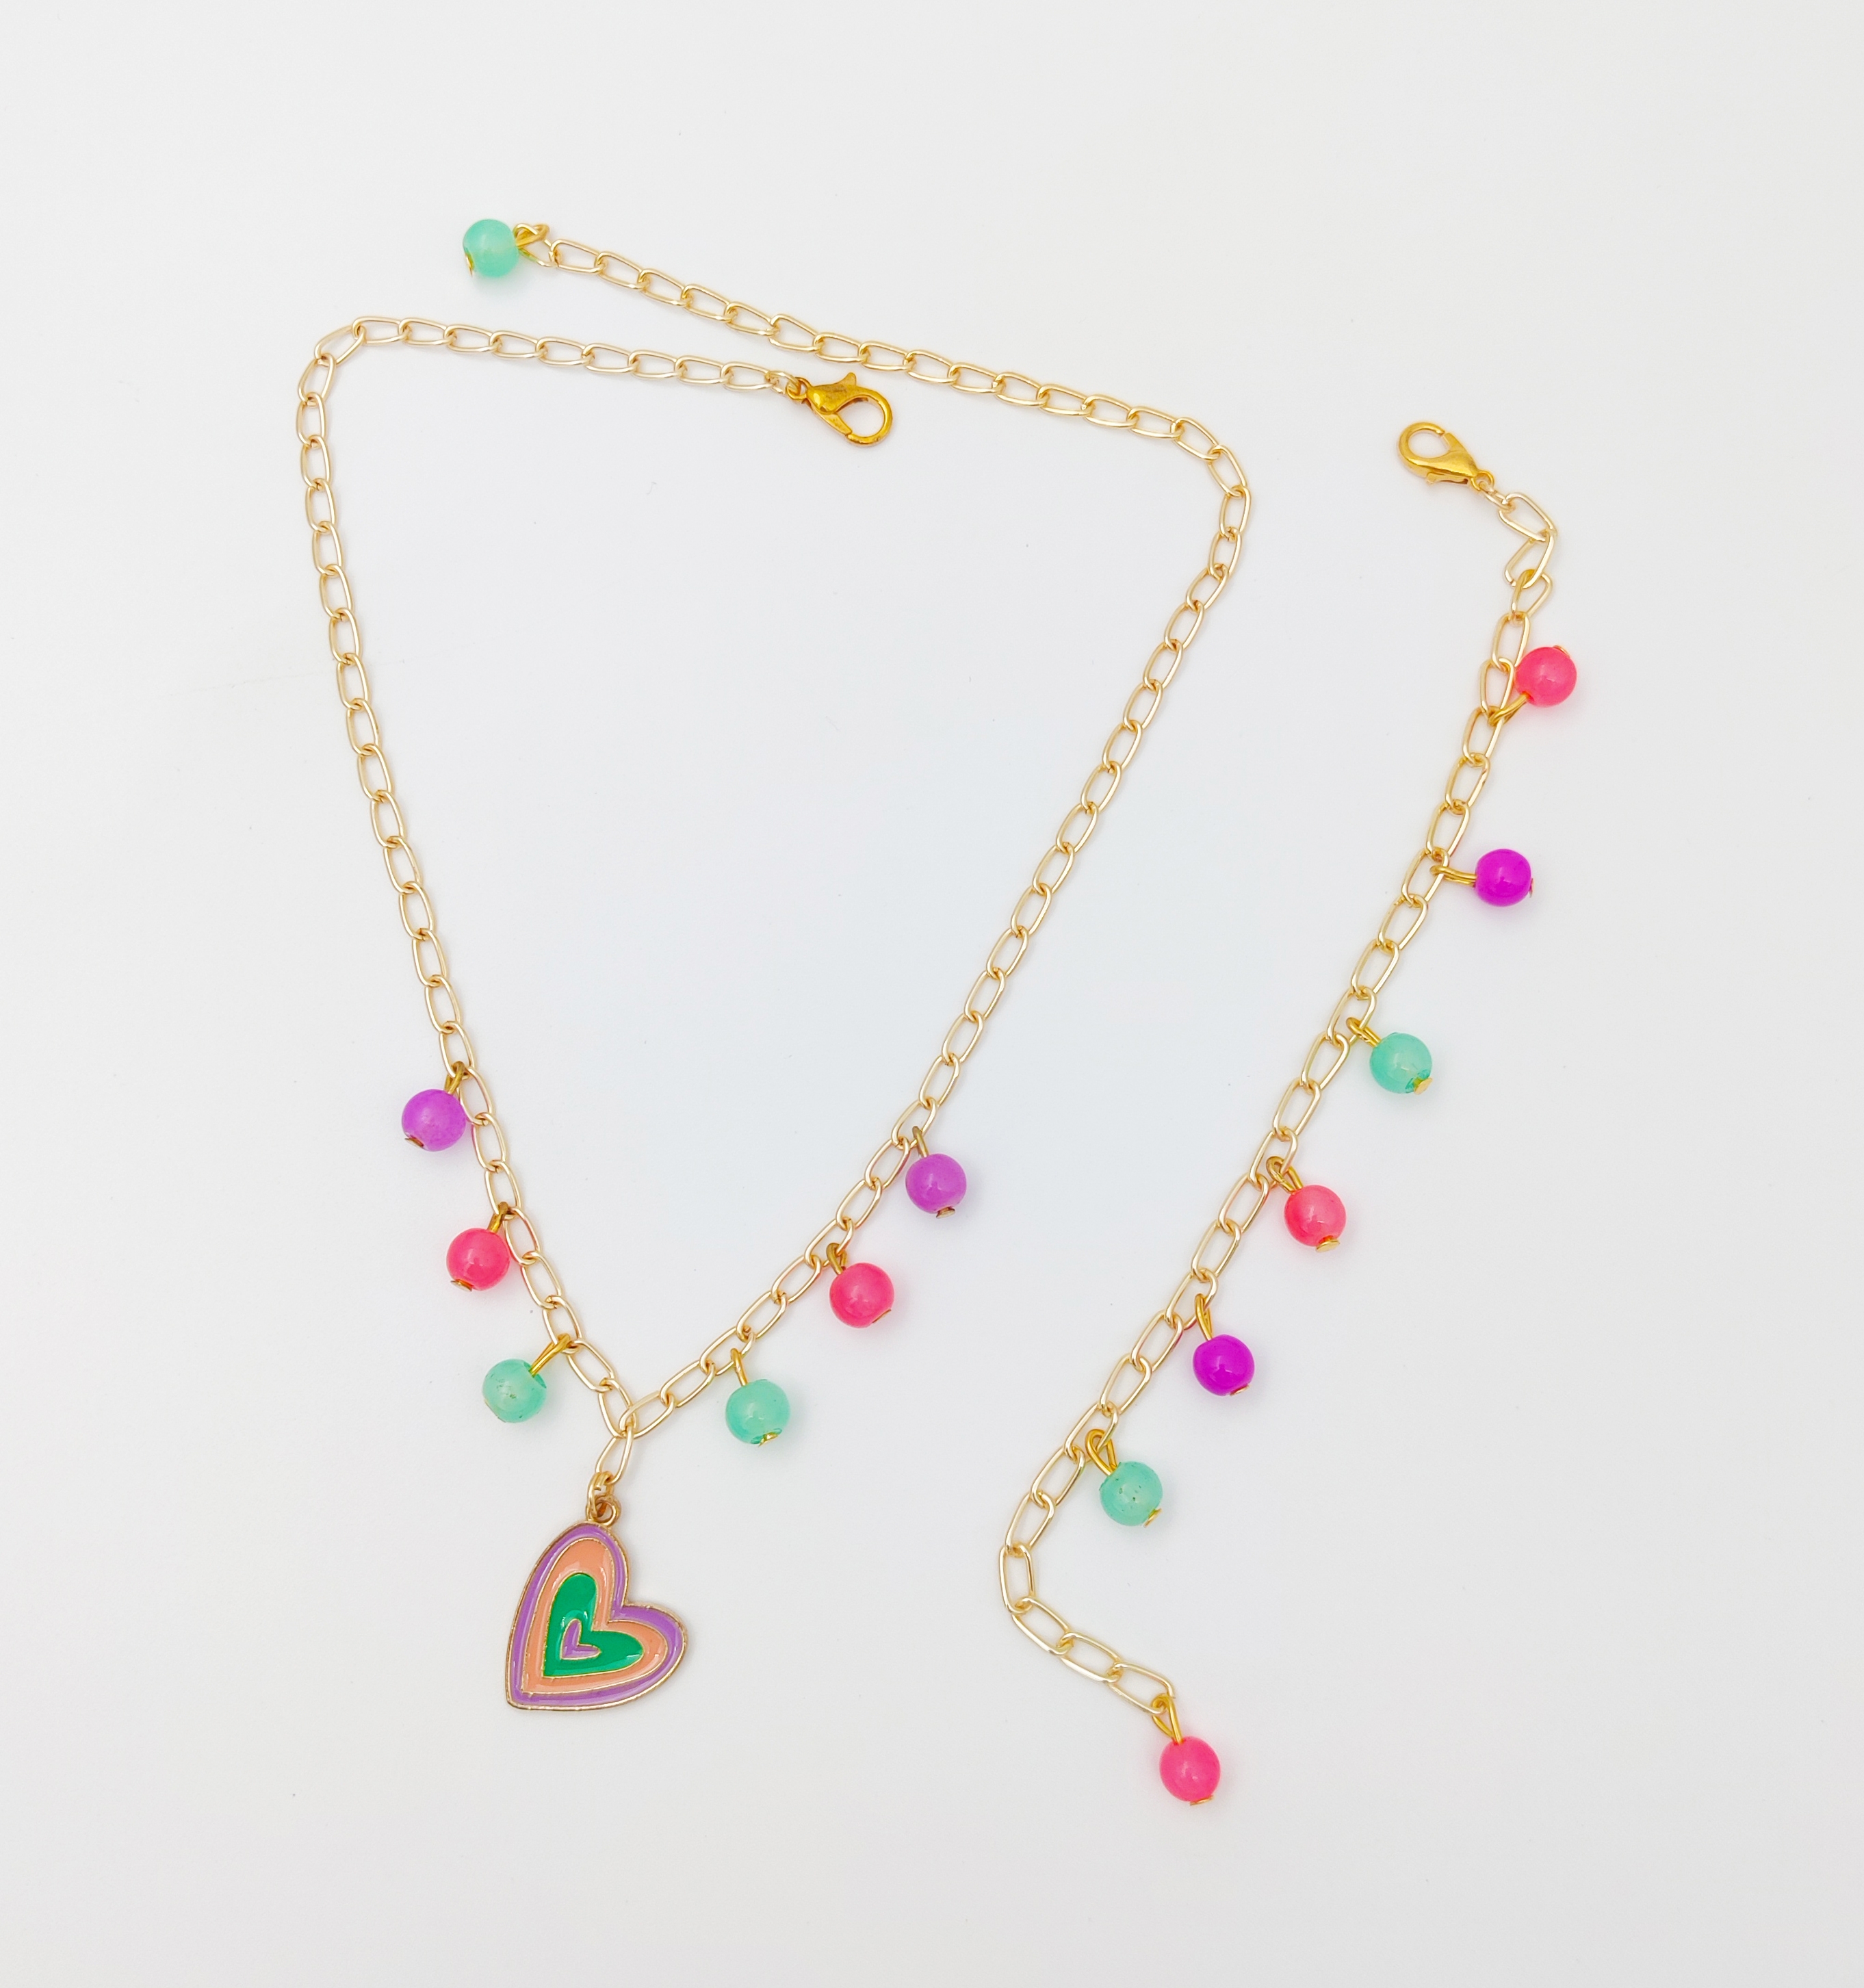 Heart Enameled Charm Necklace & Beaded Bracelet Set, pink, mauve, green